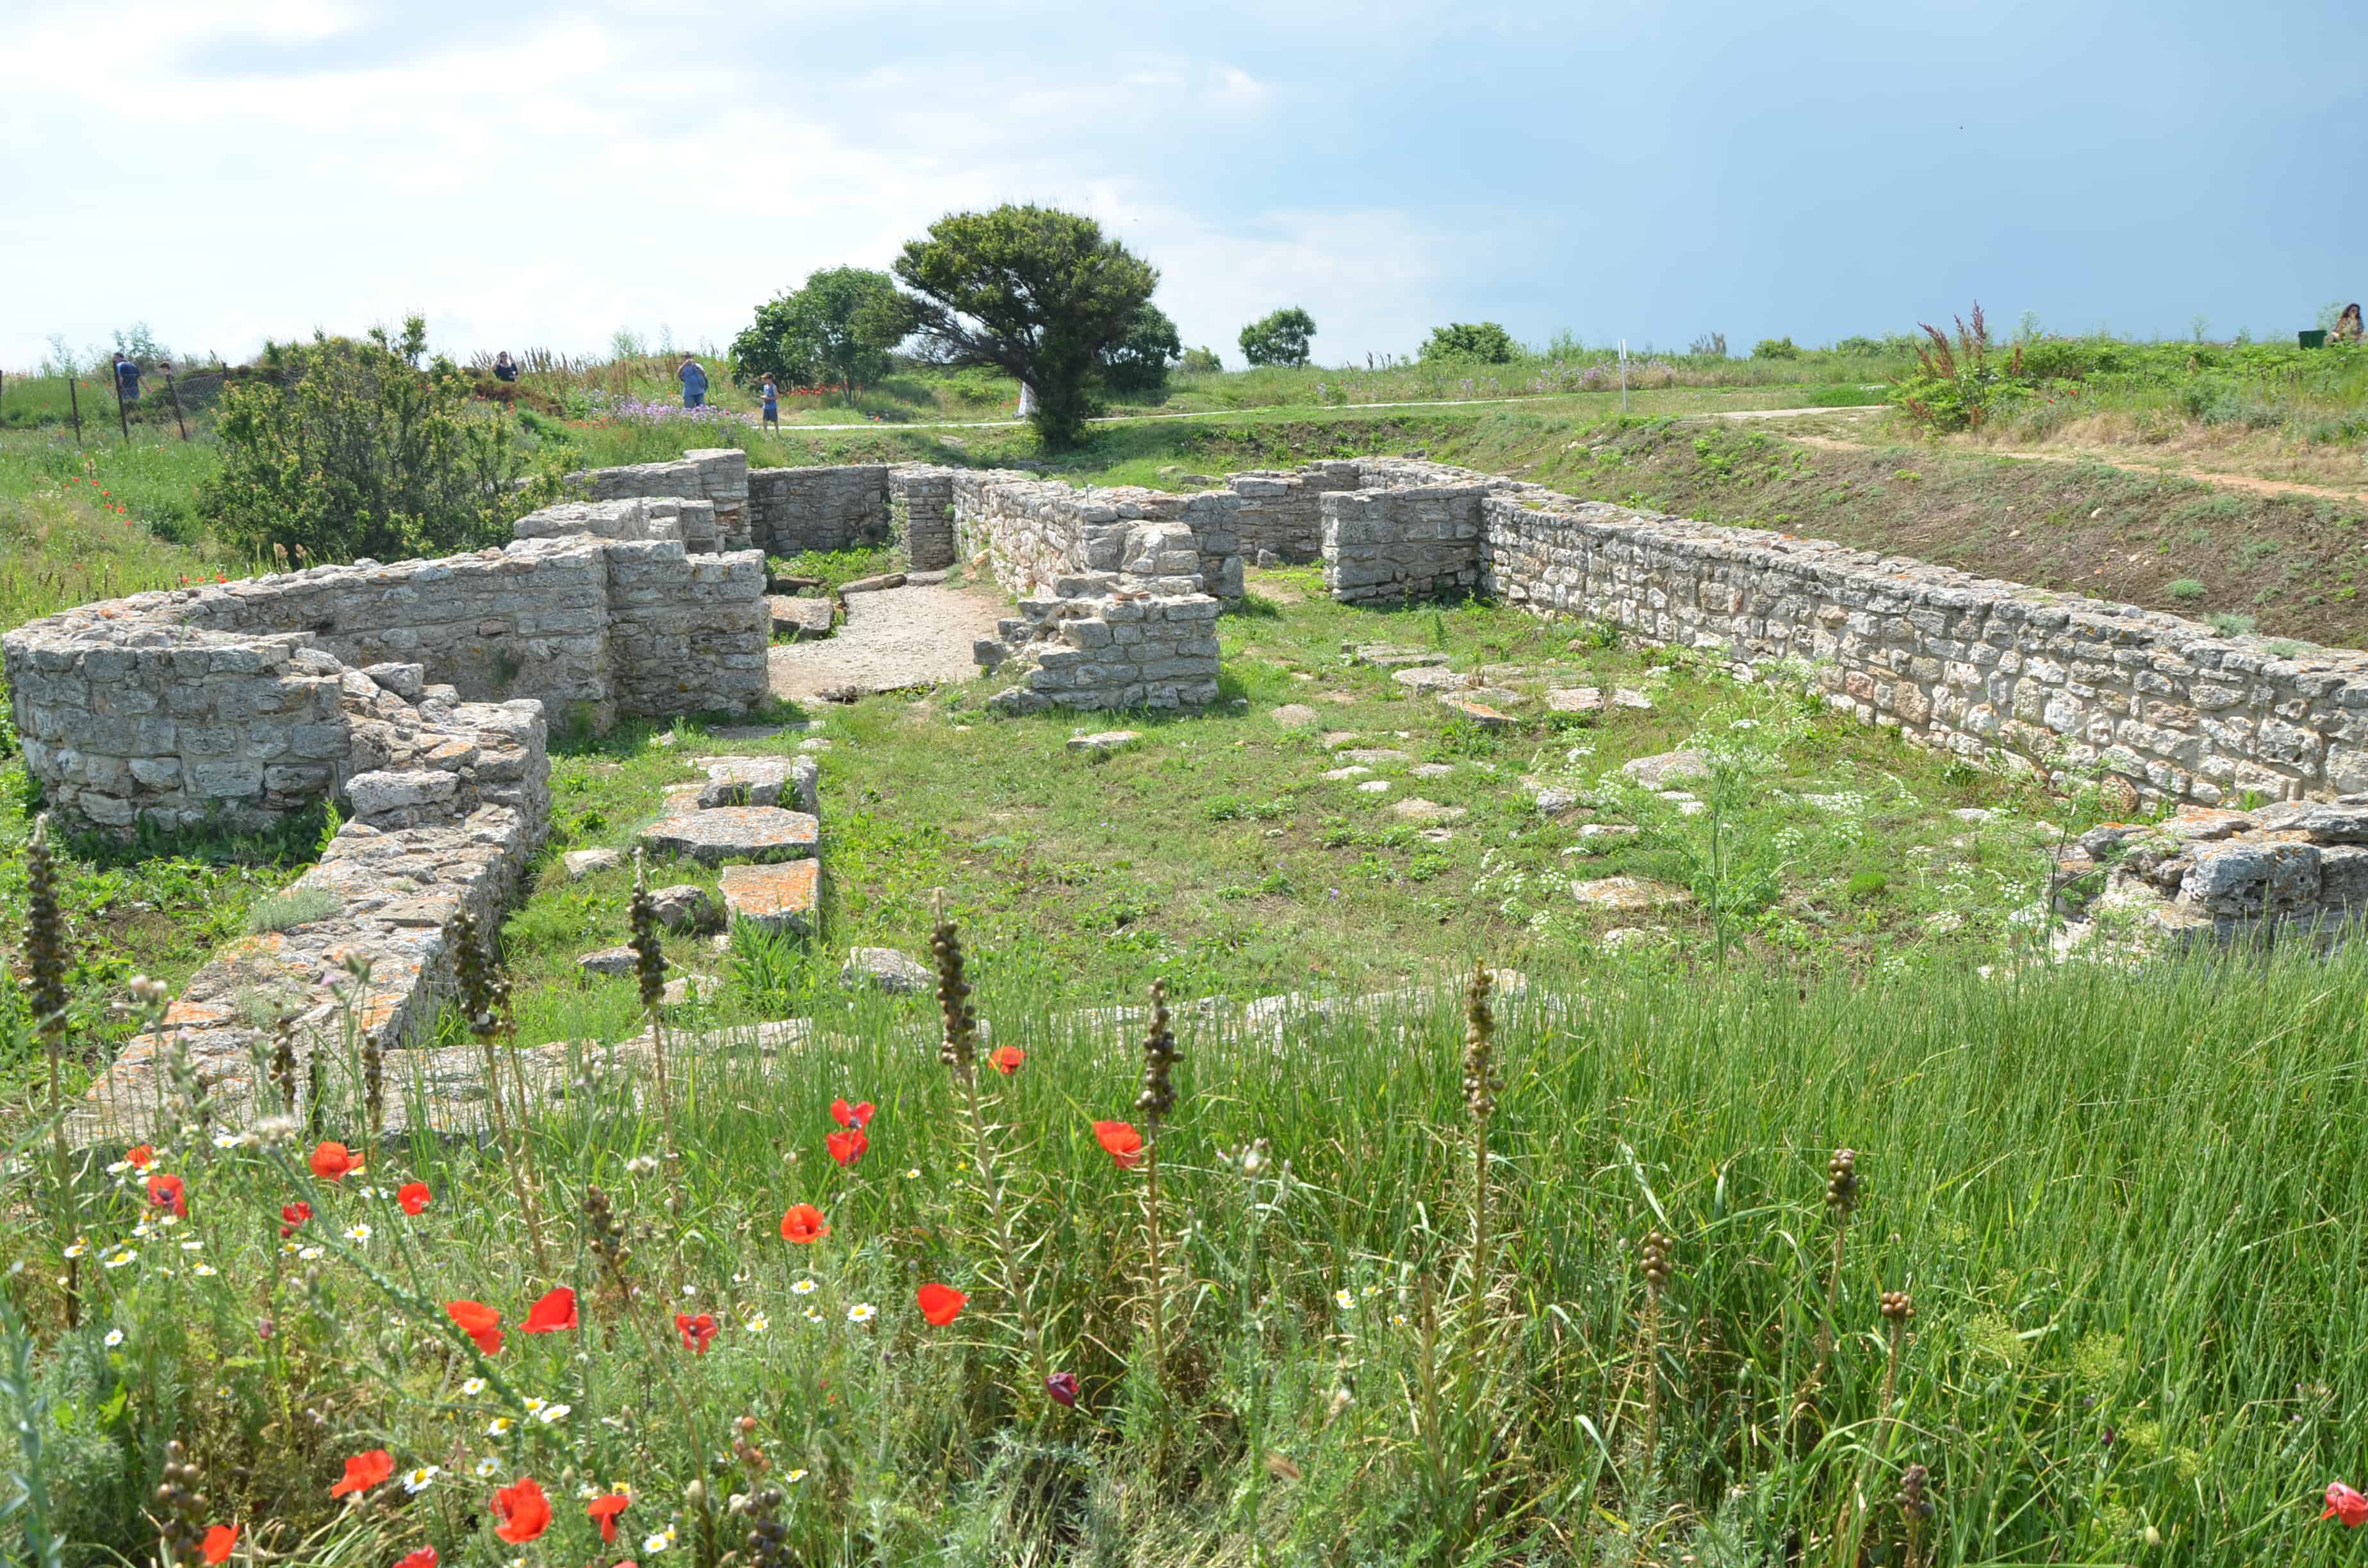 Looking into the Roman bath at Kaliakra, Bulgaria